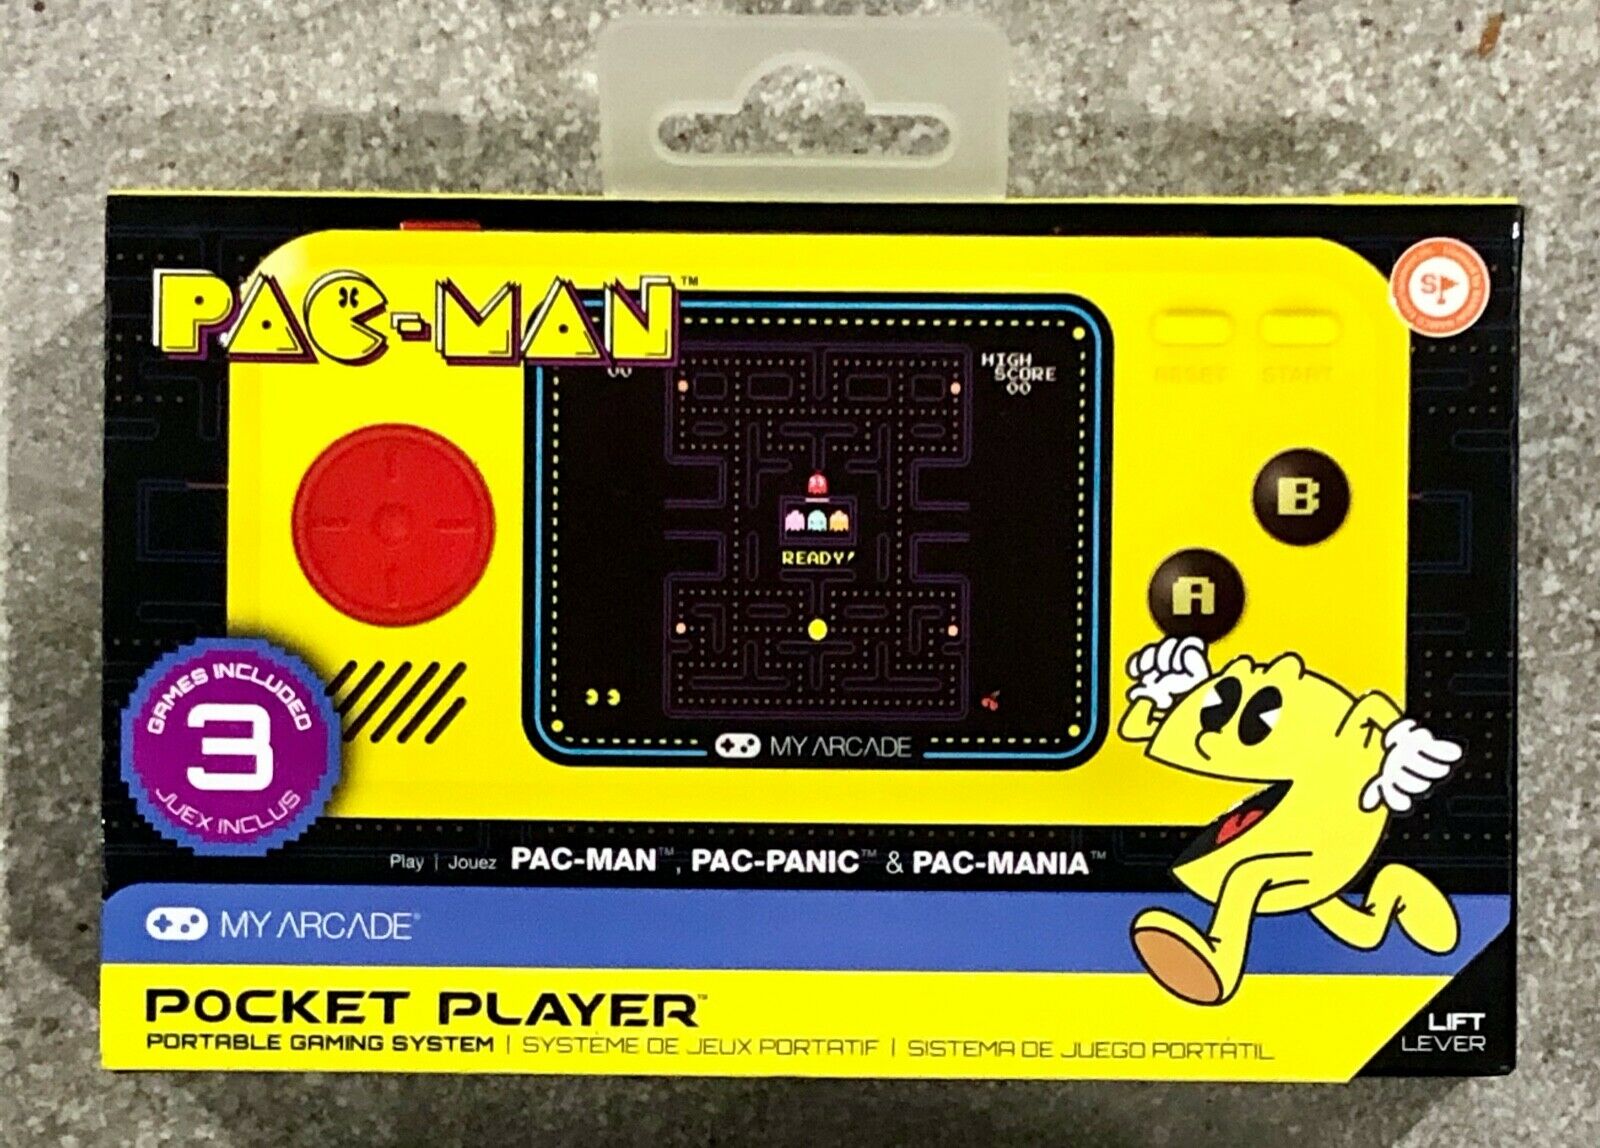 My Arcade - Pac-man Pocket Player Portable Gaming System (yellow/black) New!